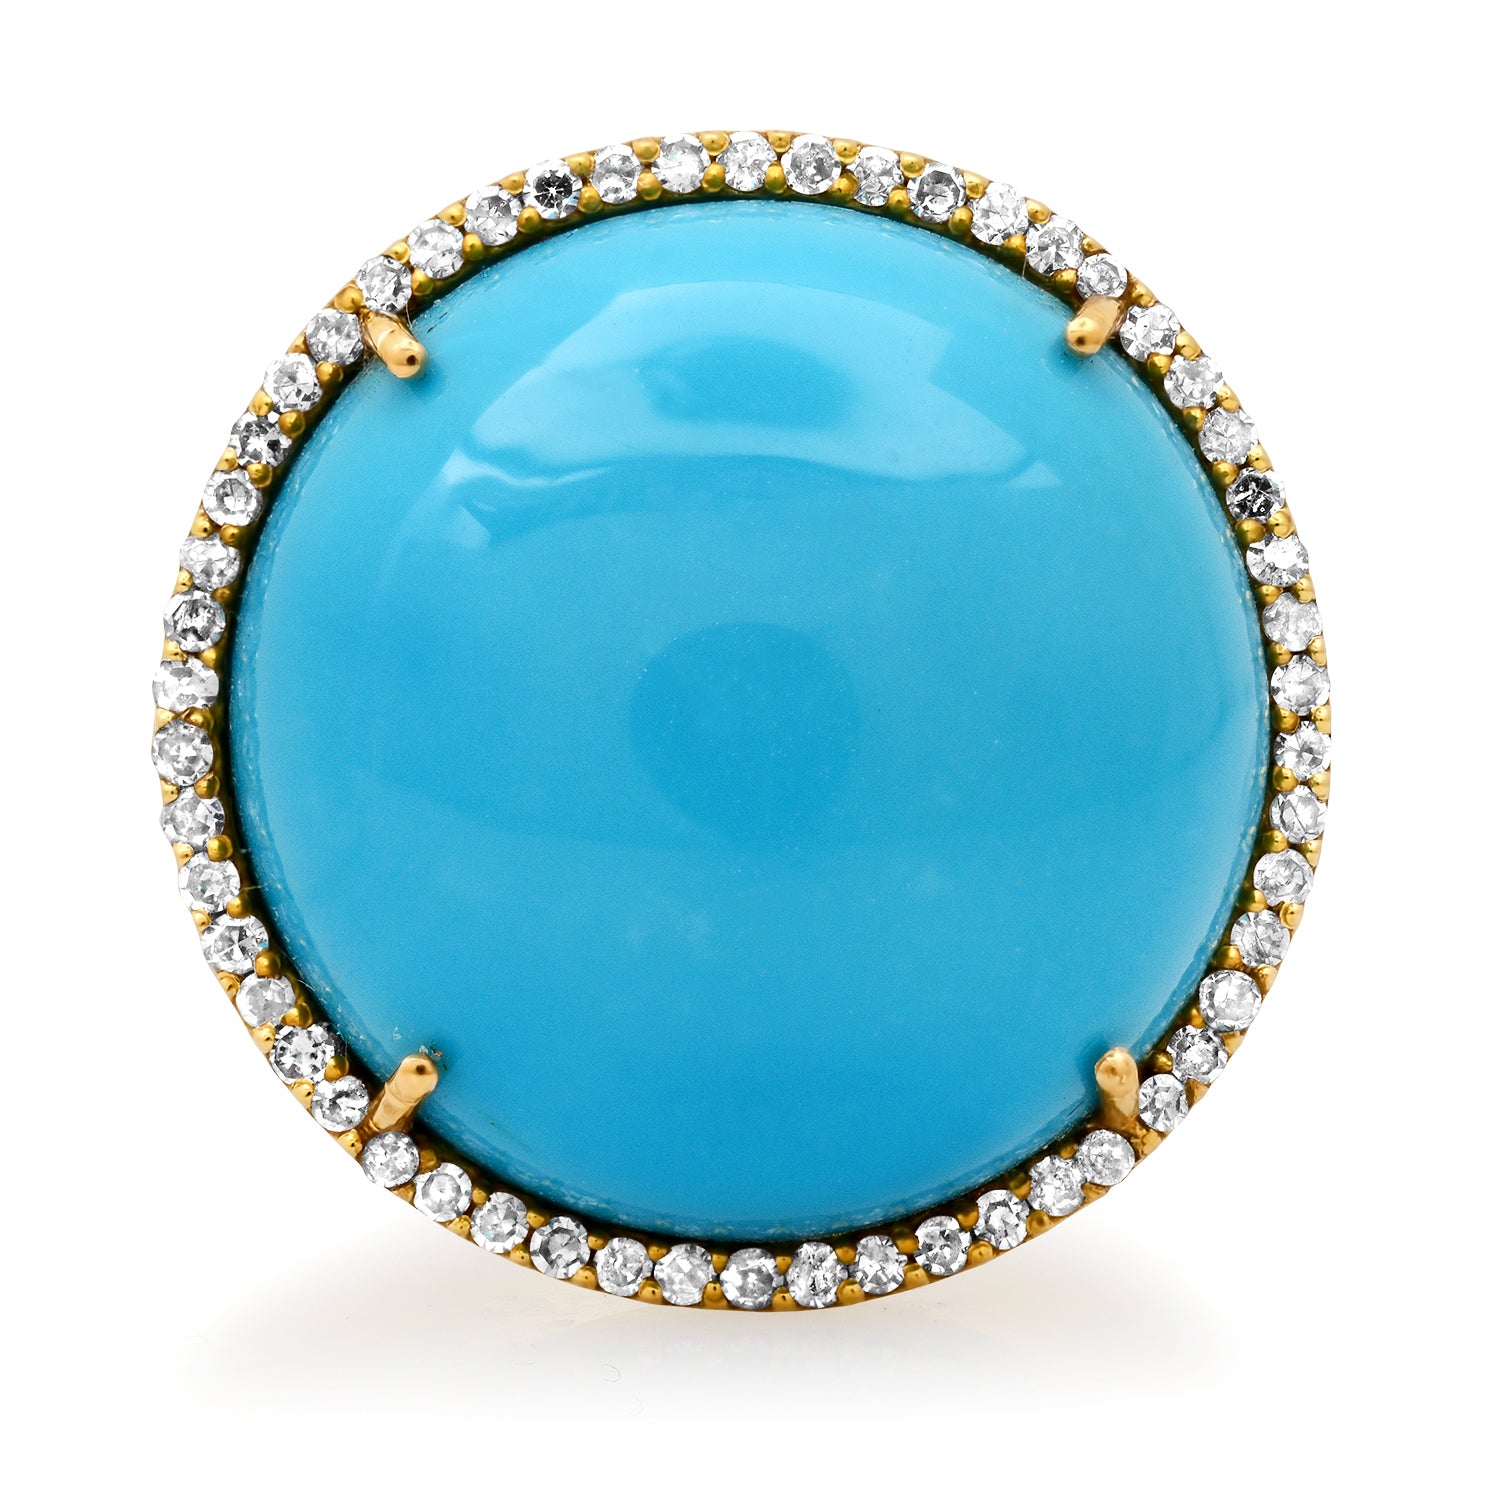 Medium Round Turquoise with Diamond Border Ring